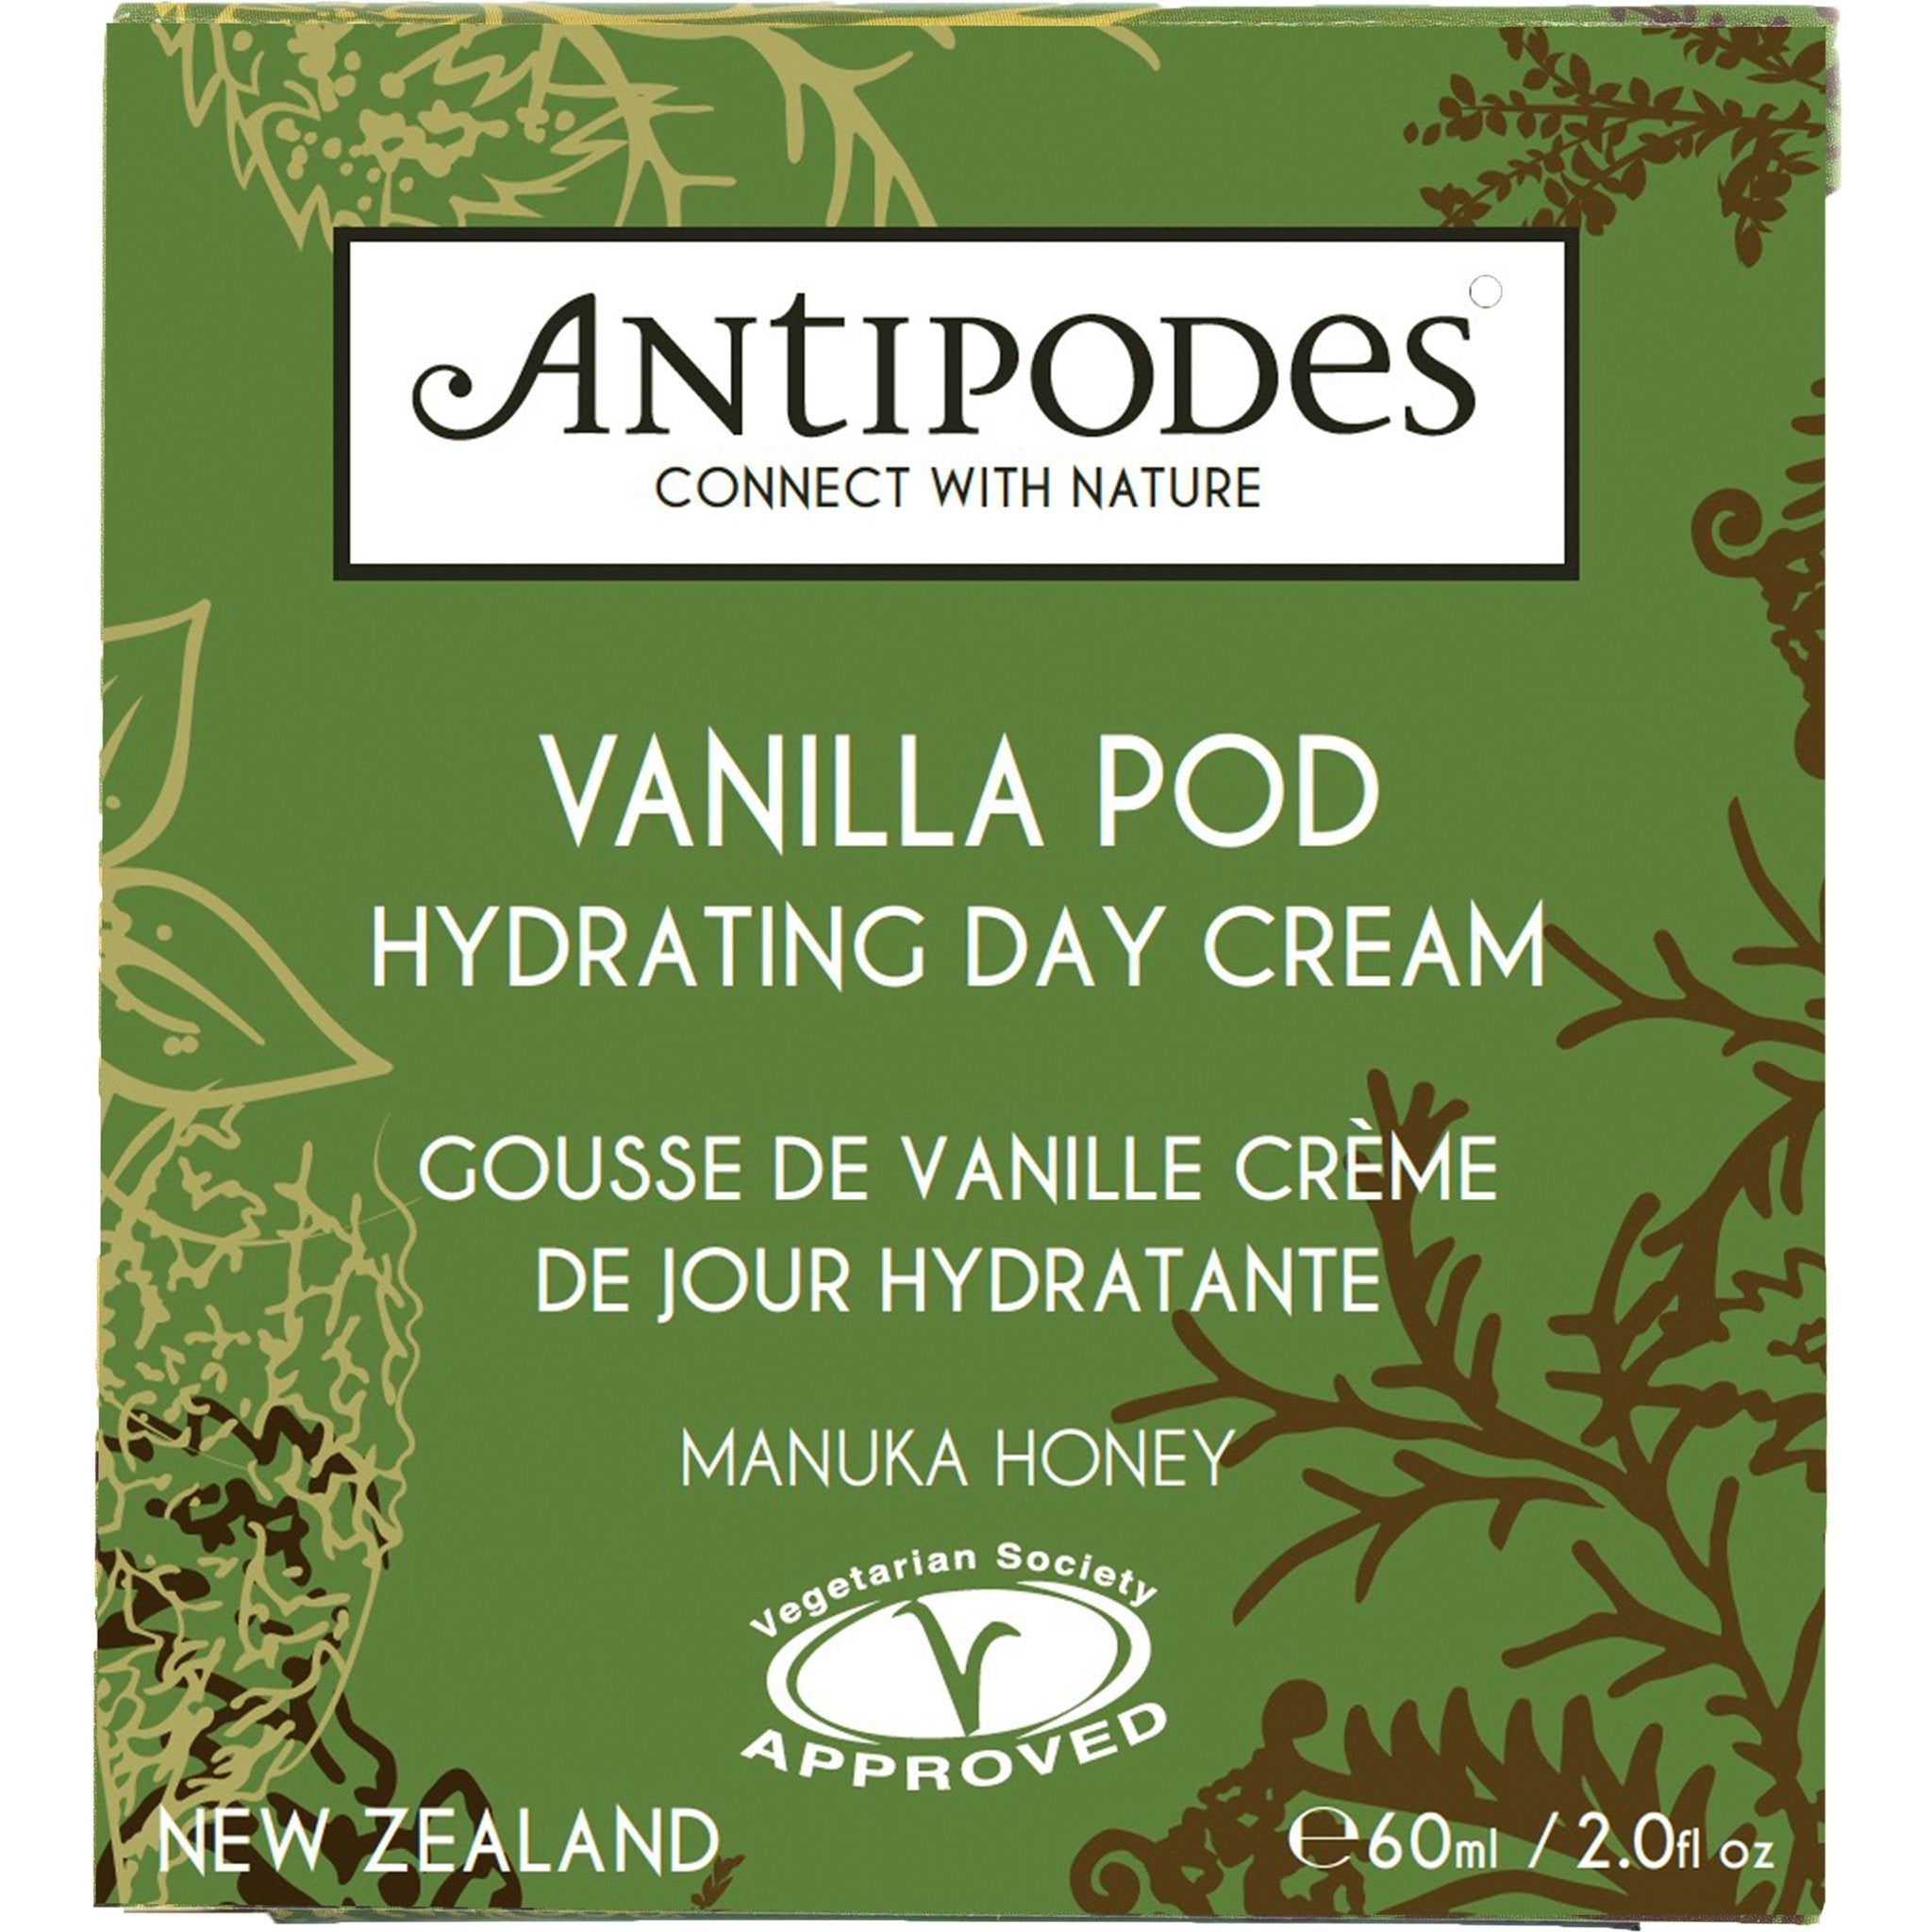 **BACK SOON** Vanilla Pod Hydrating Day Cream - mypure.co.uk